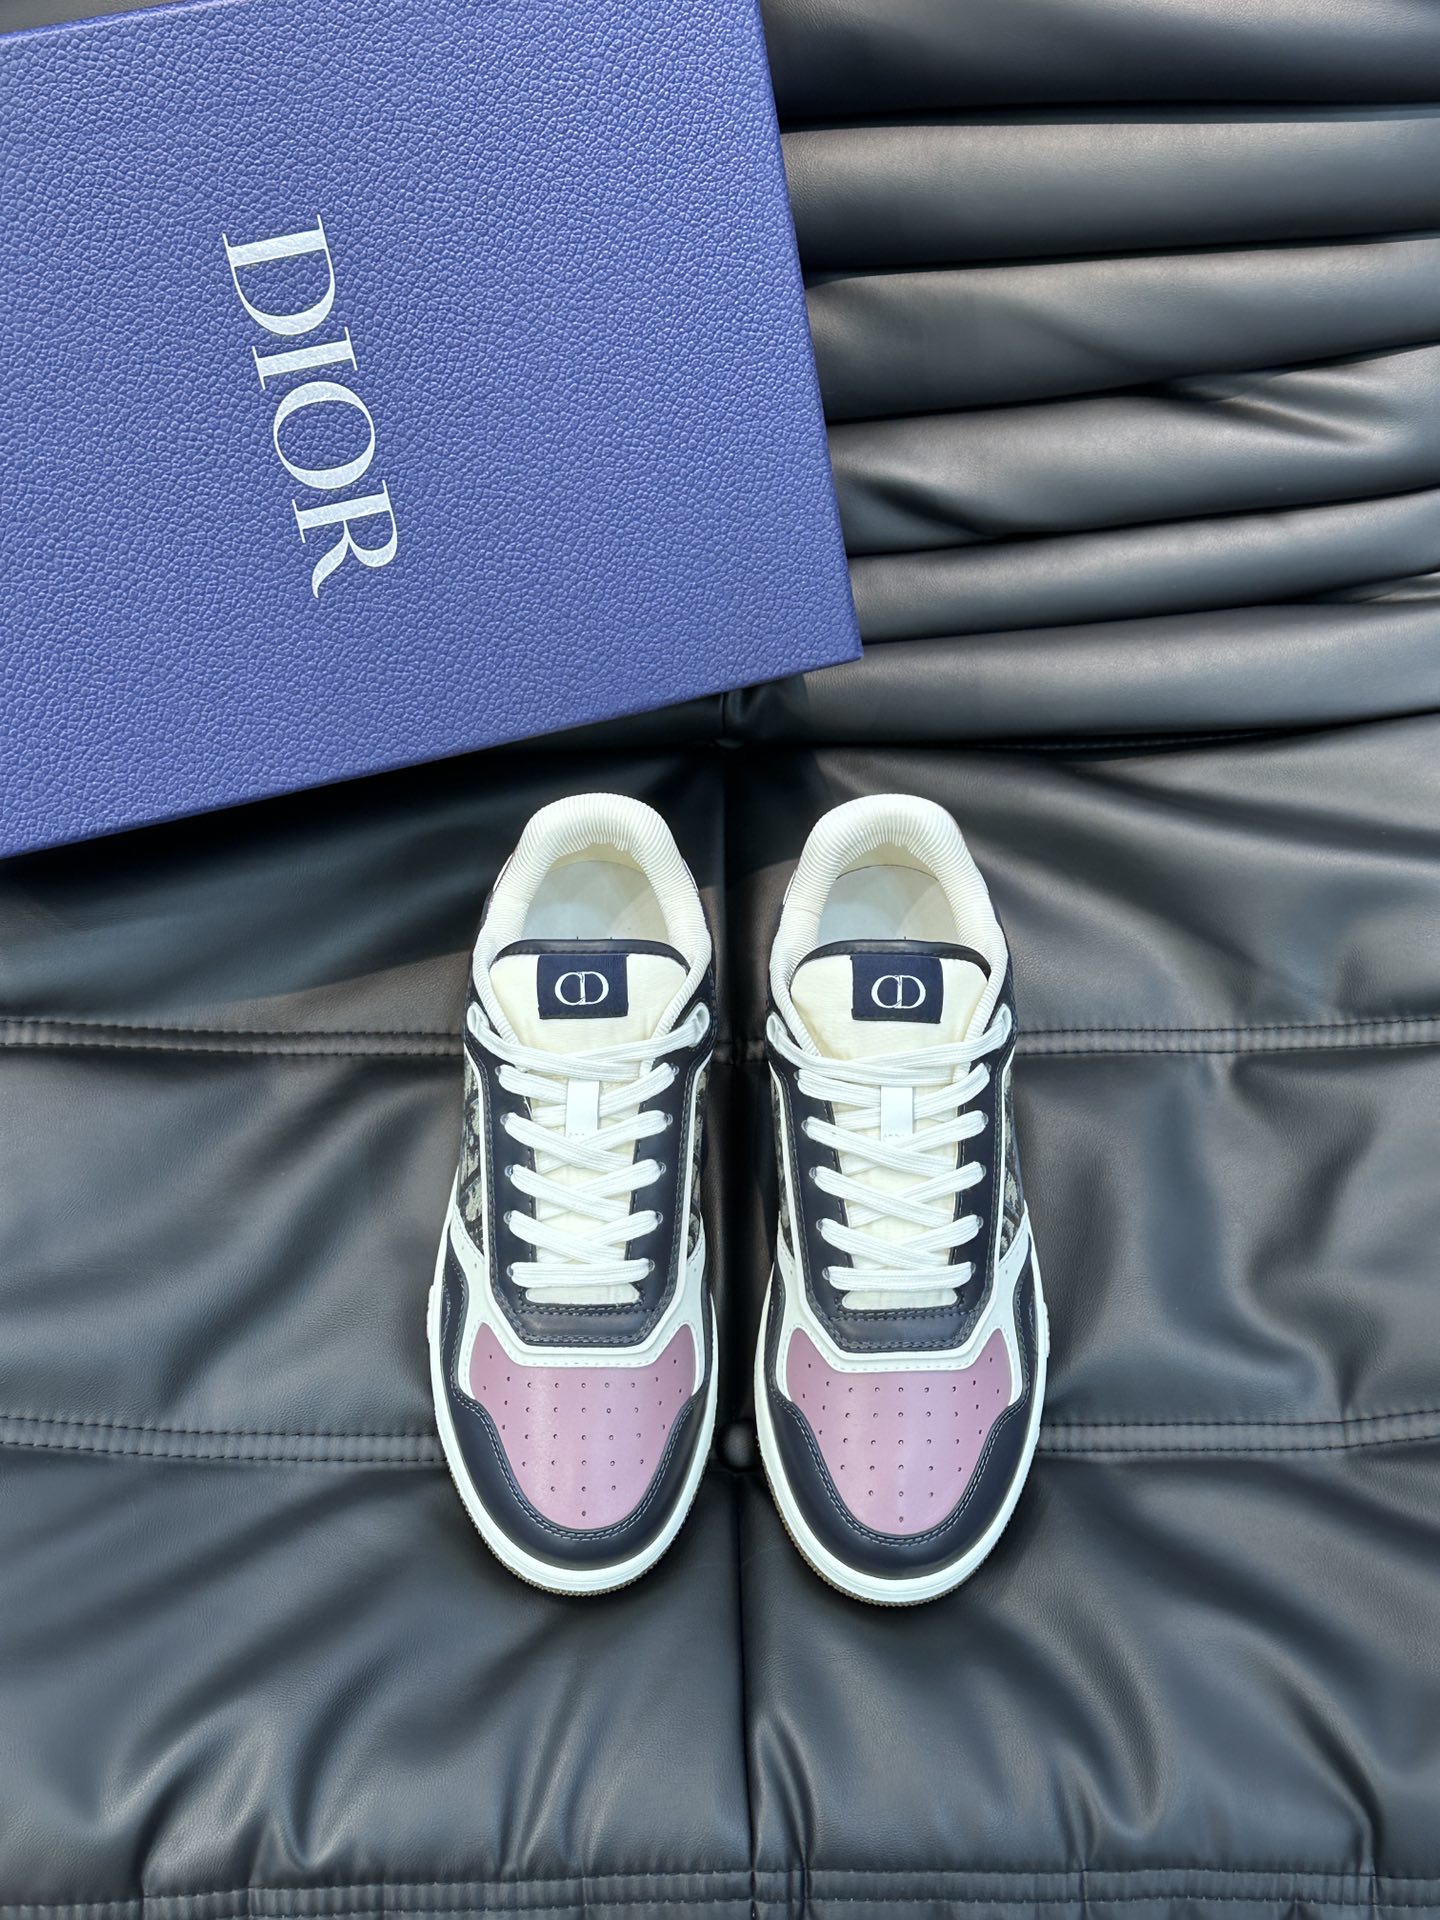 Dior Replicas Shoes Sneakers White Printing Unisex Cotton Cowhide Rubber Oblique Low Tops